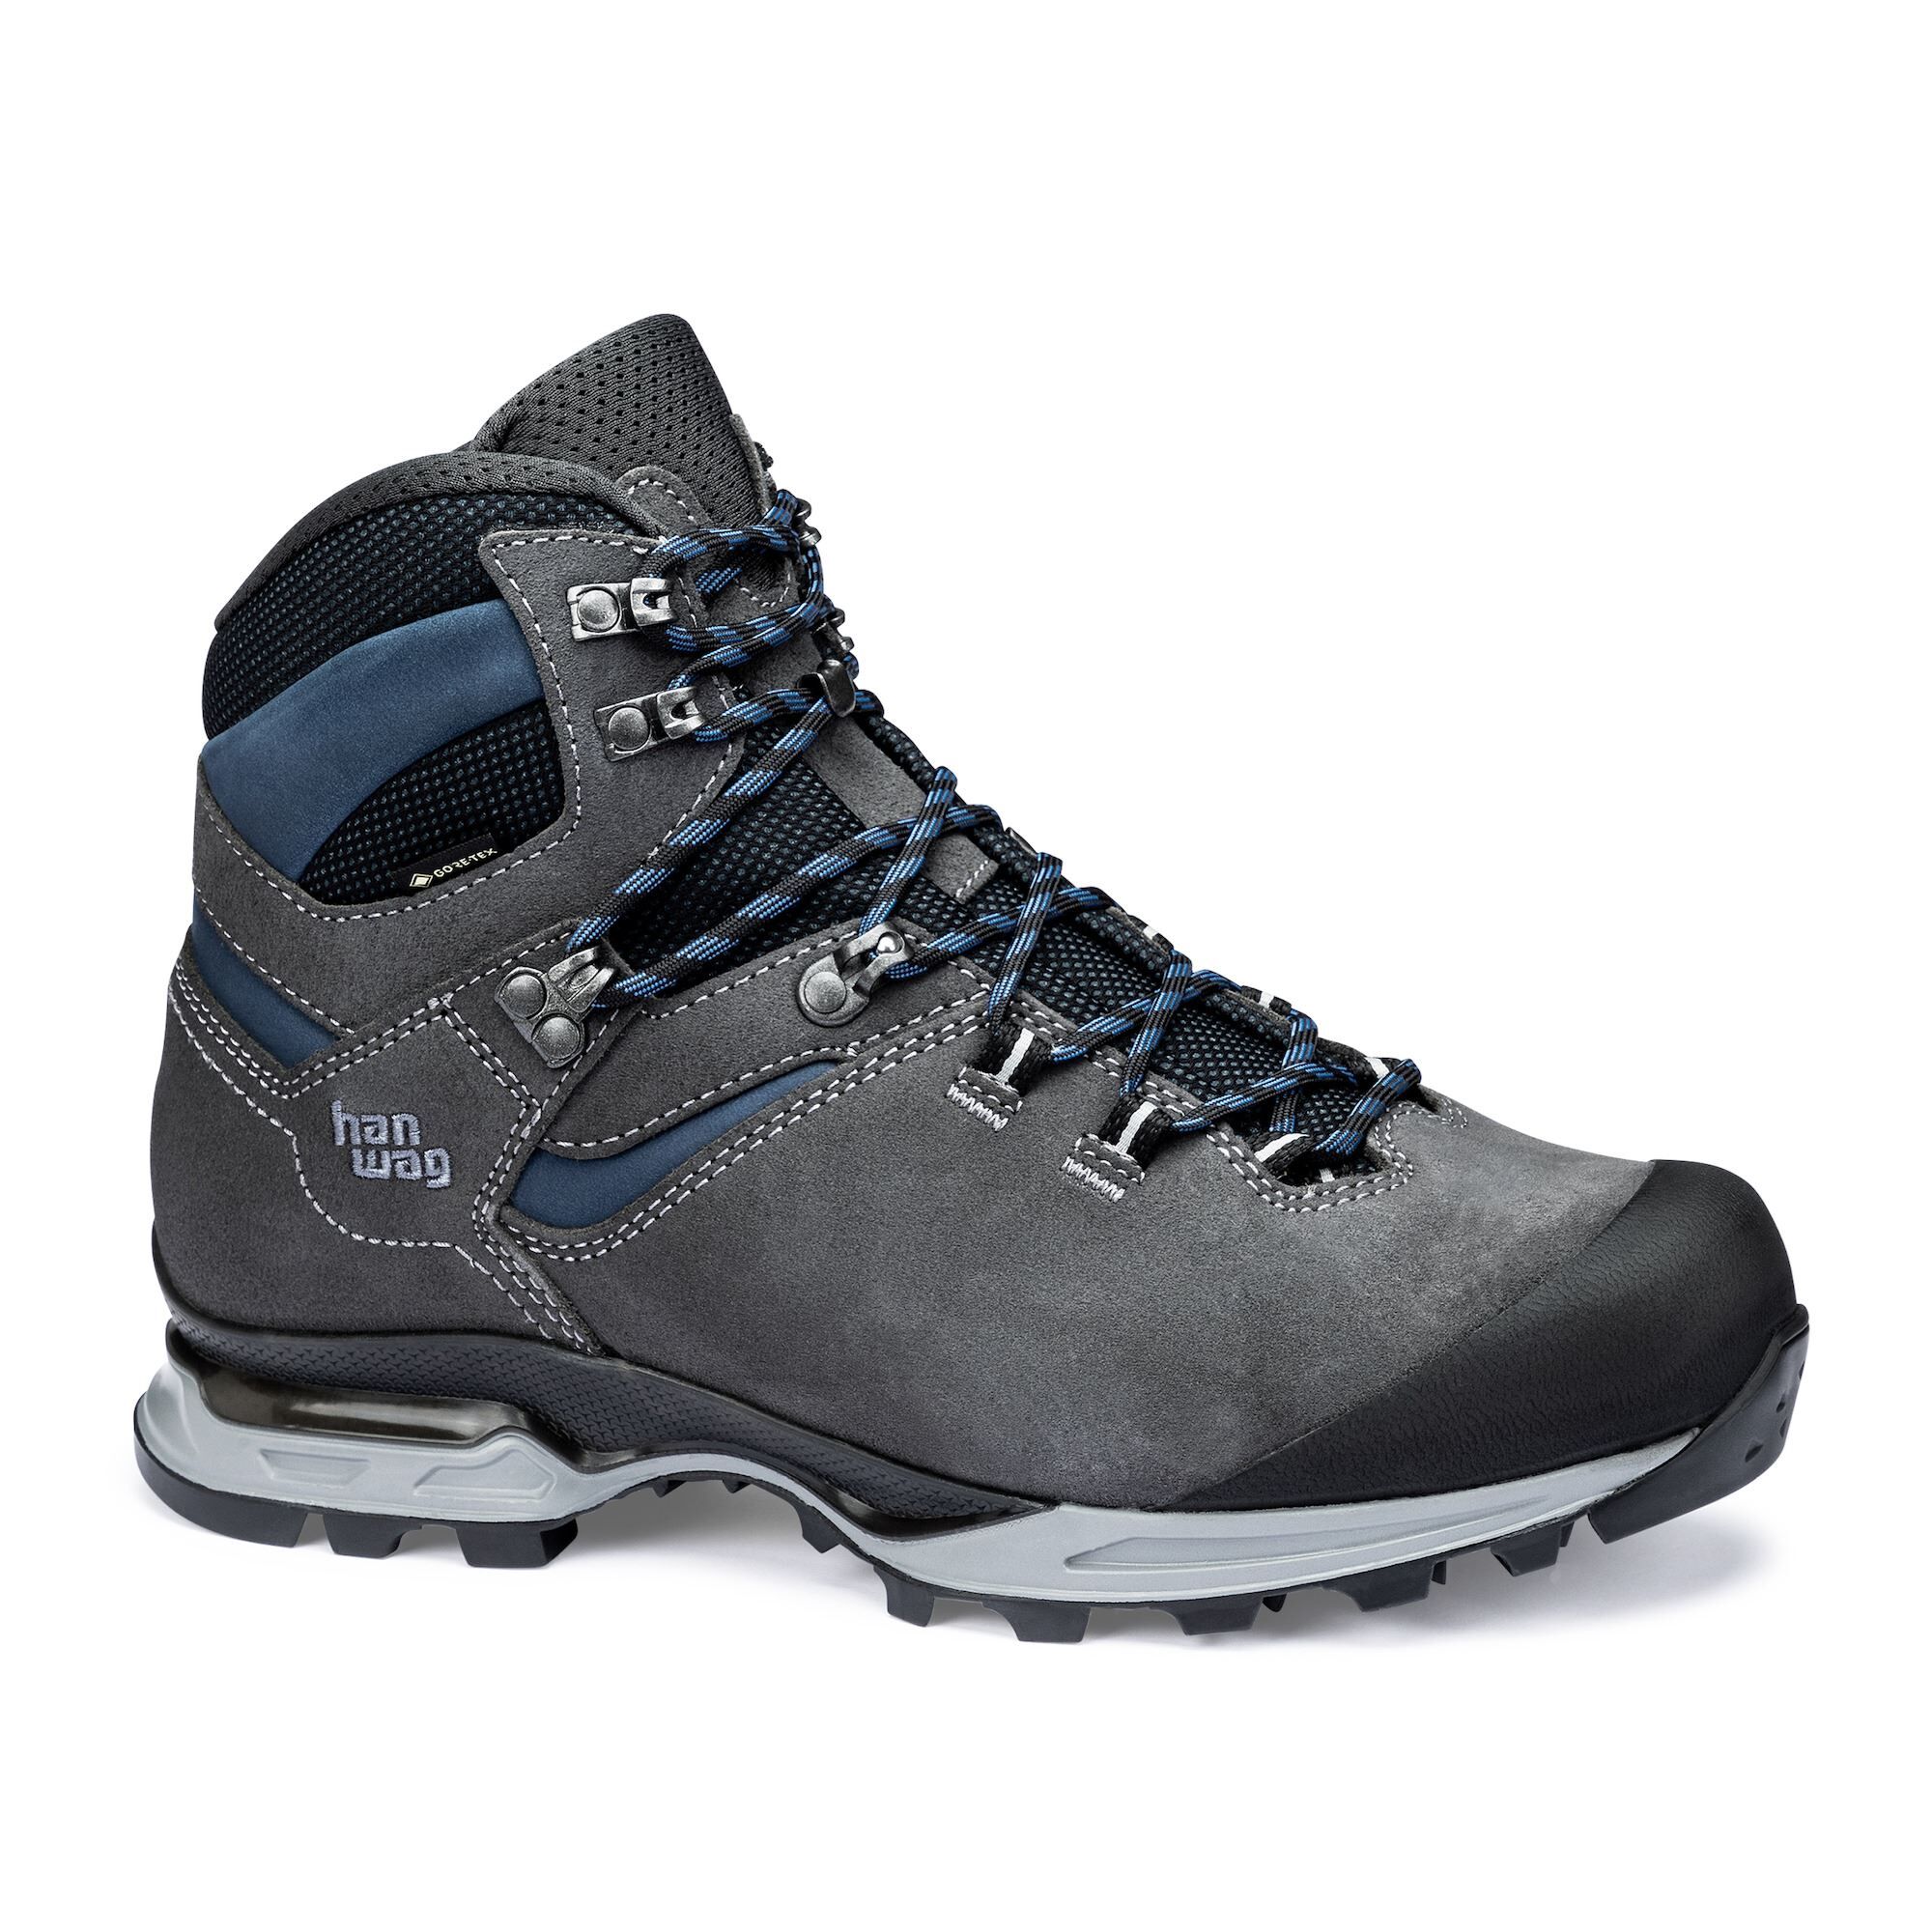 Hanwag Tatra Light Bunion GTX - Hiking Boots - Men's